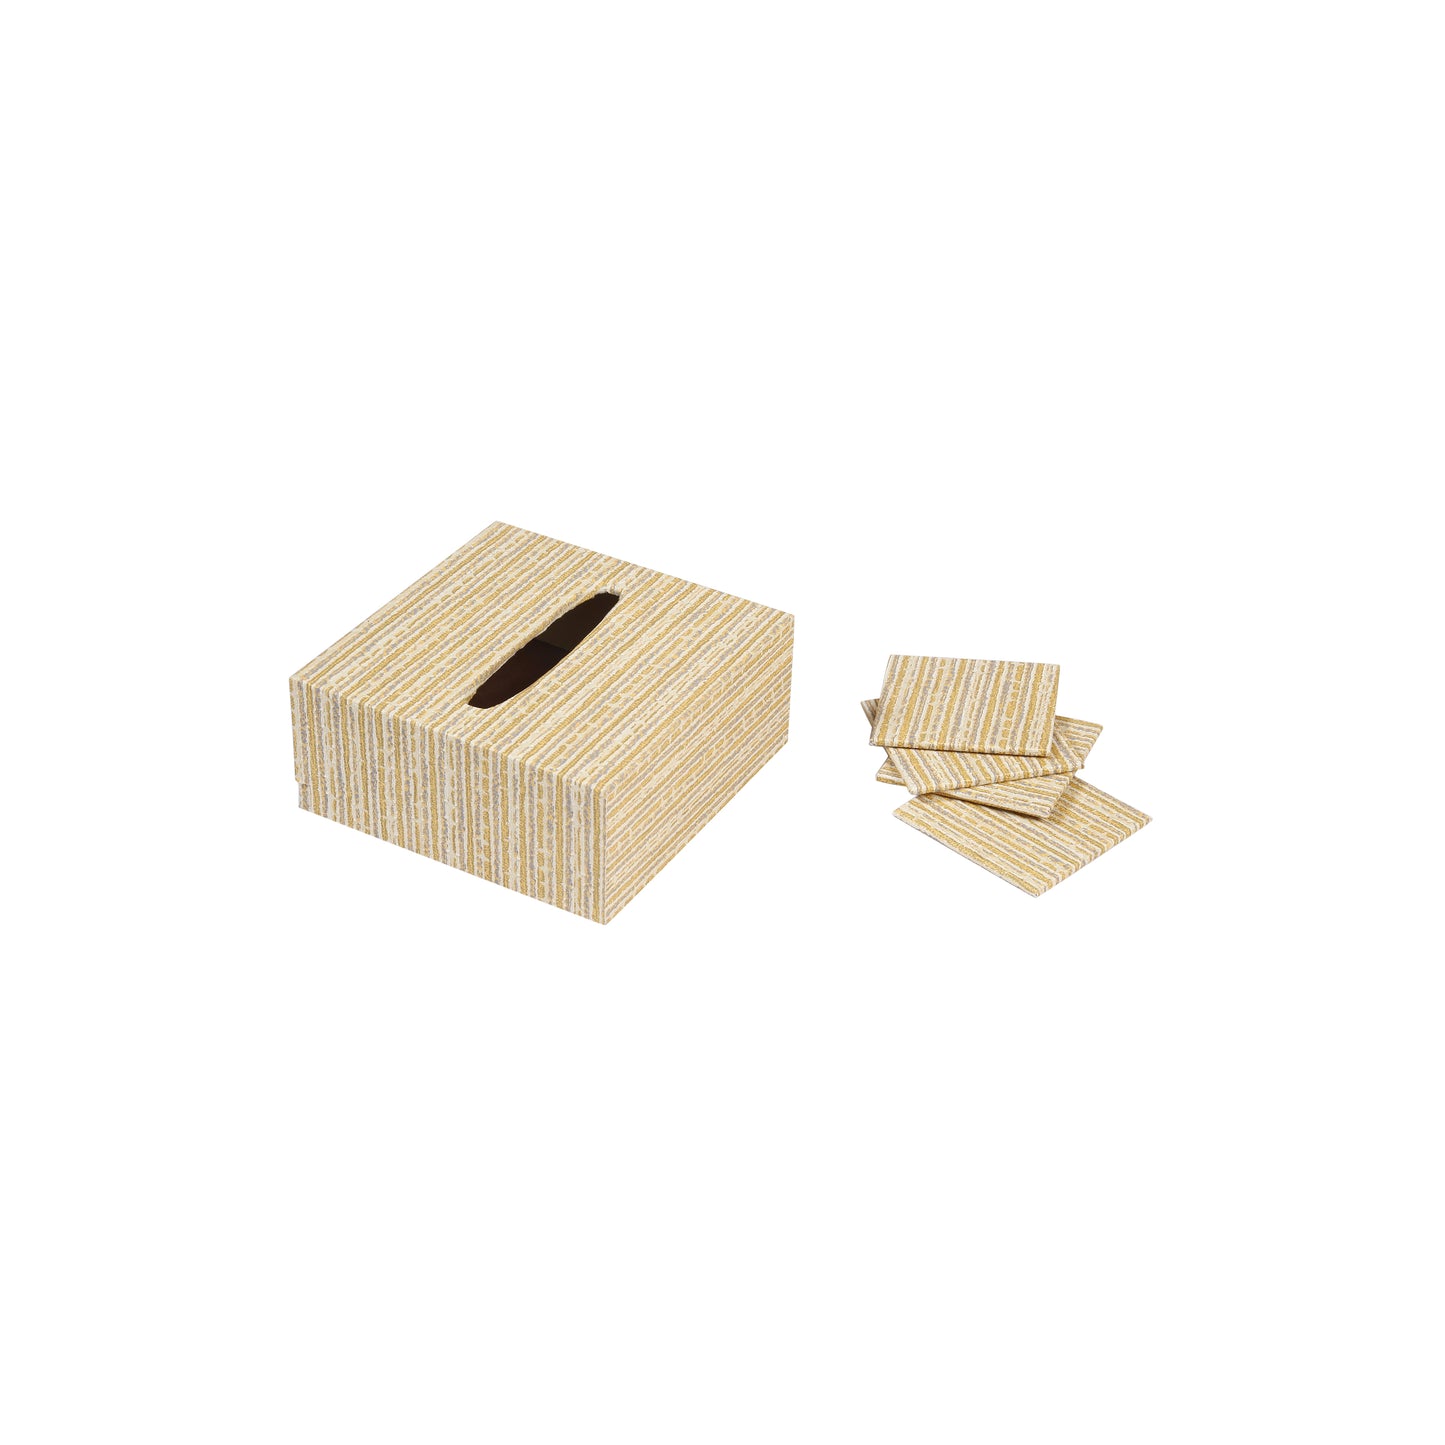 A Tiny Mistake Khadi Pattern Square Tissue Box, 18 x 18 x 7.5 cm